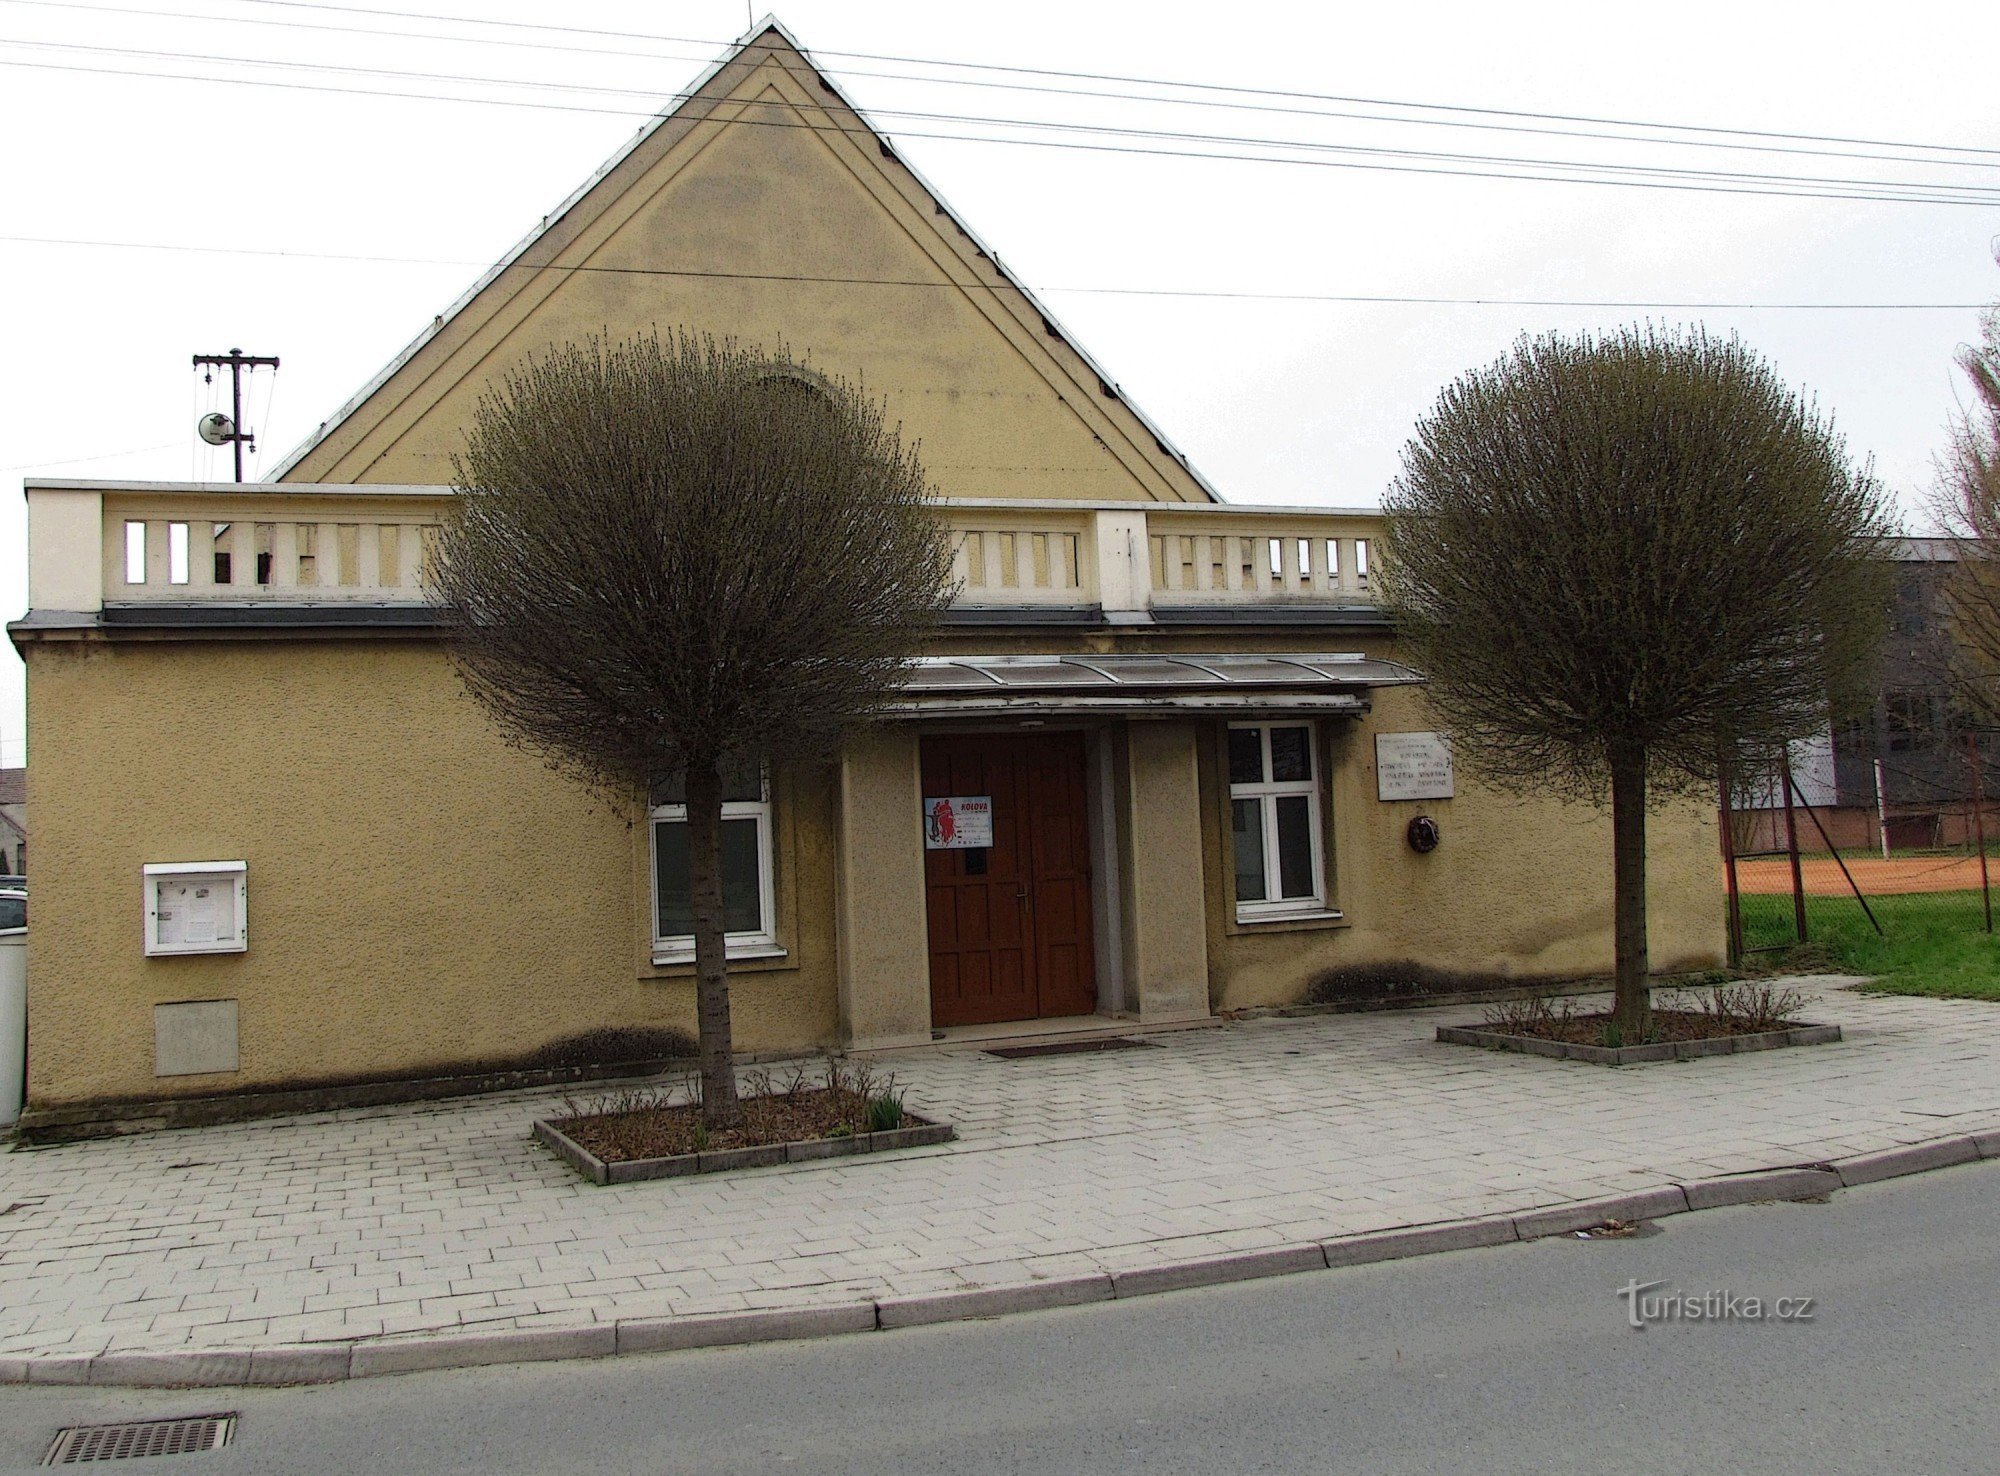 the Sokolovna building